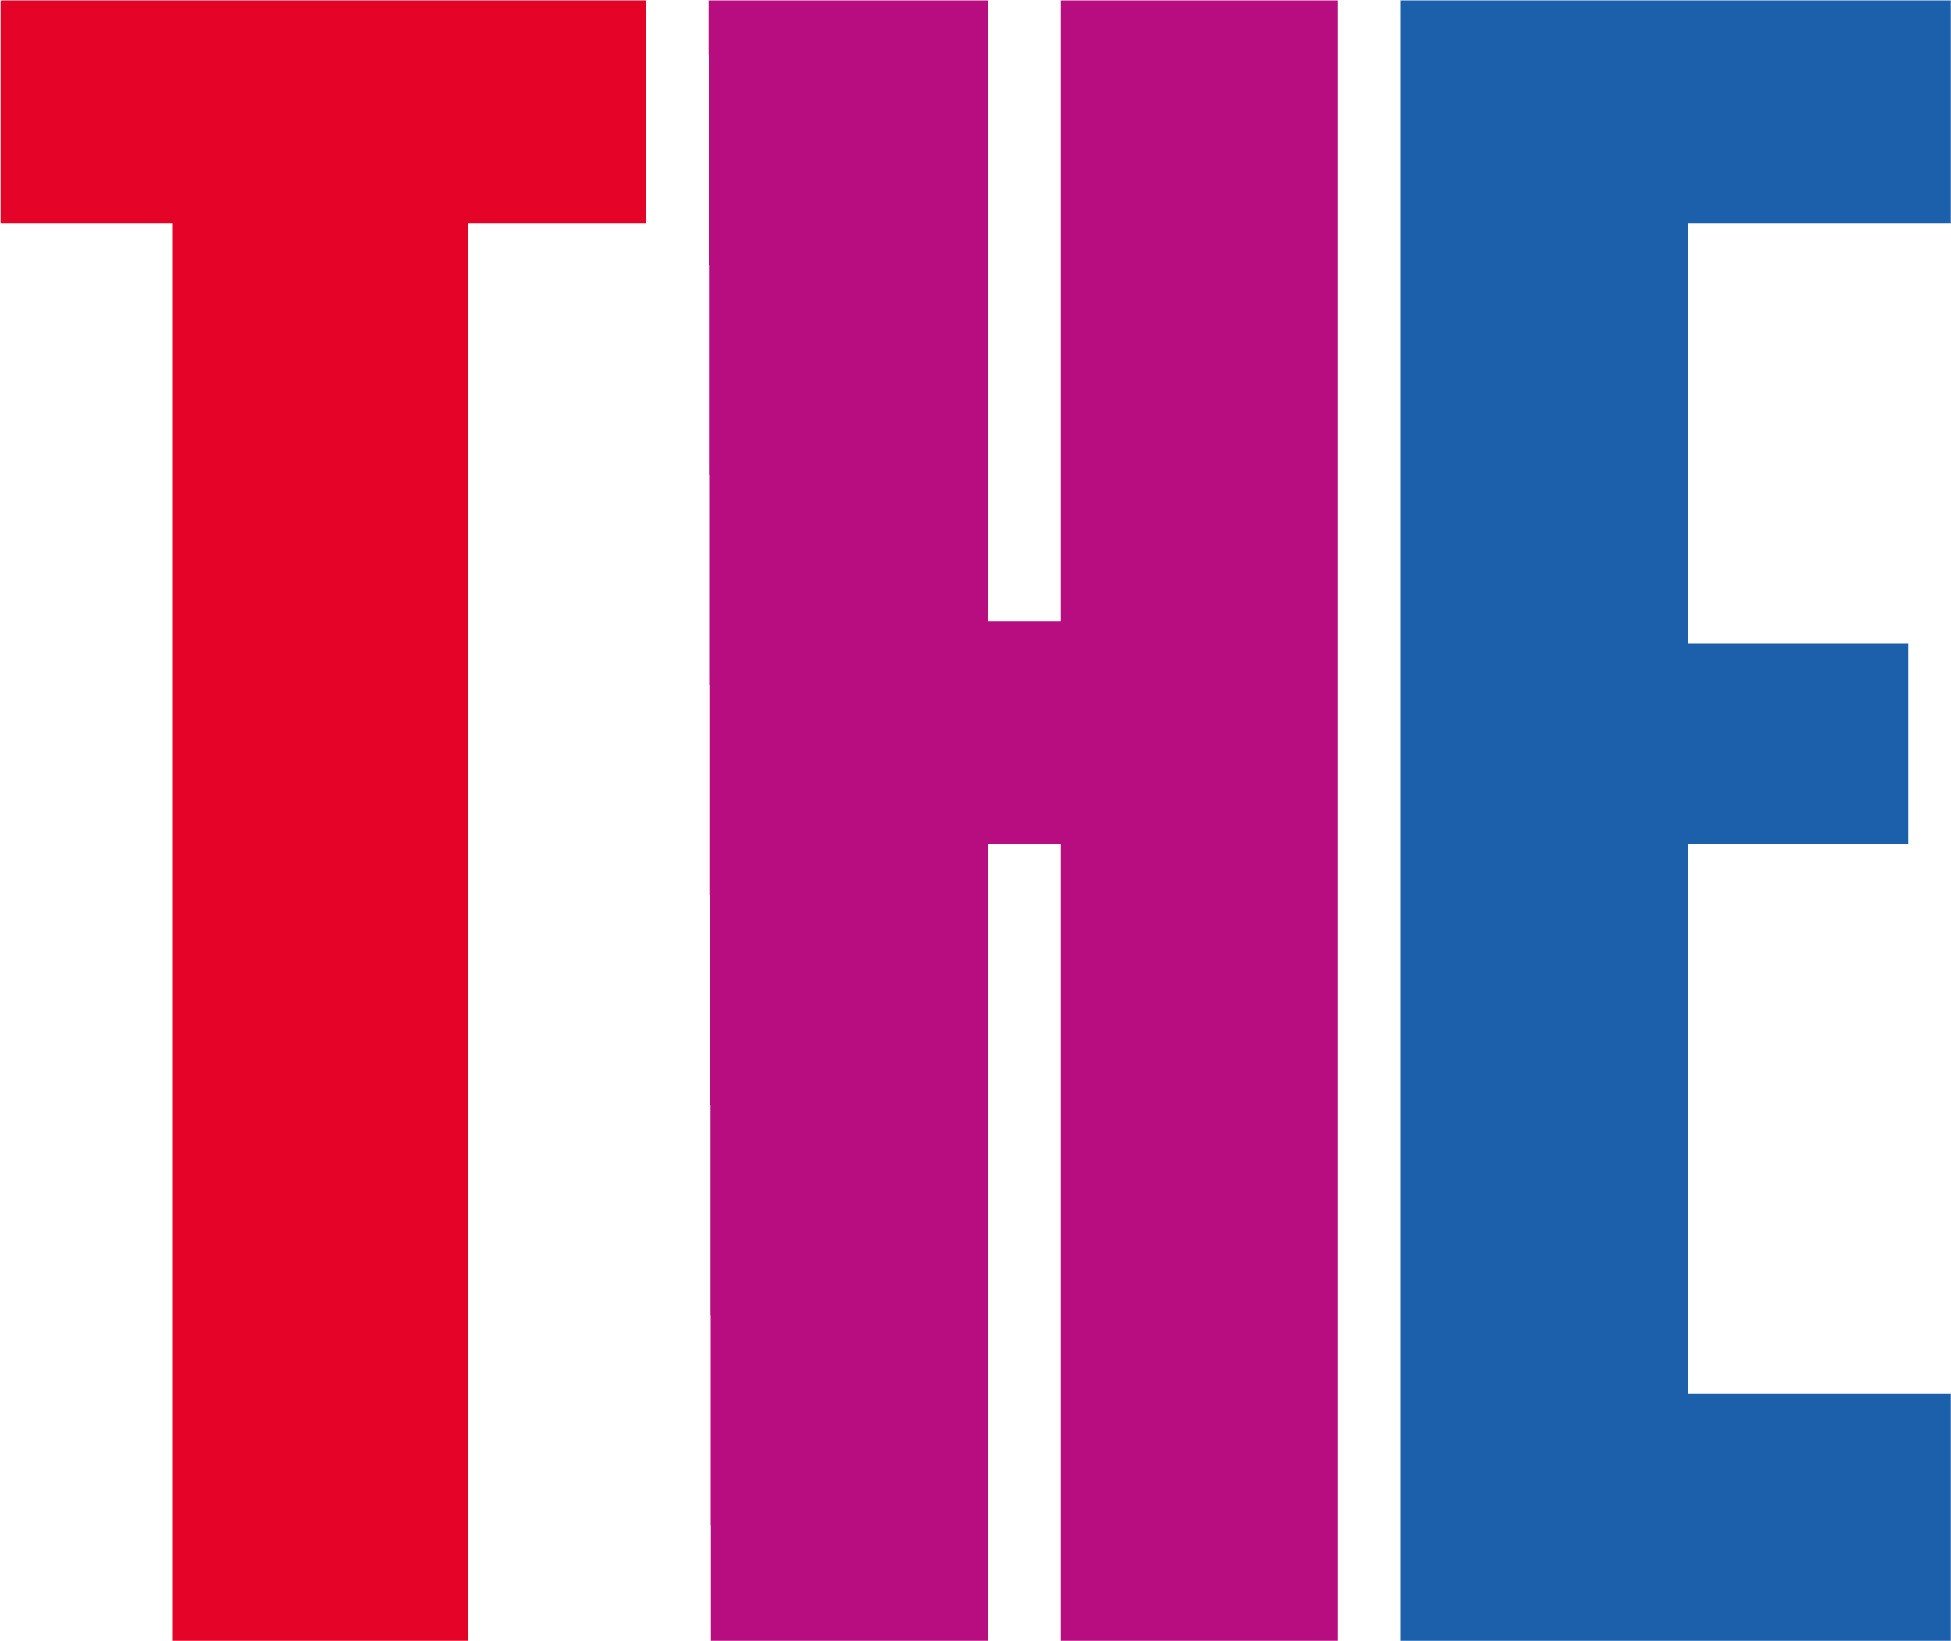 Kırmızı T, mor H ve mavi E ile Times Higher Education logosu.